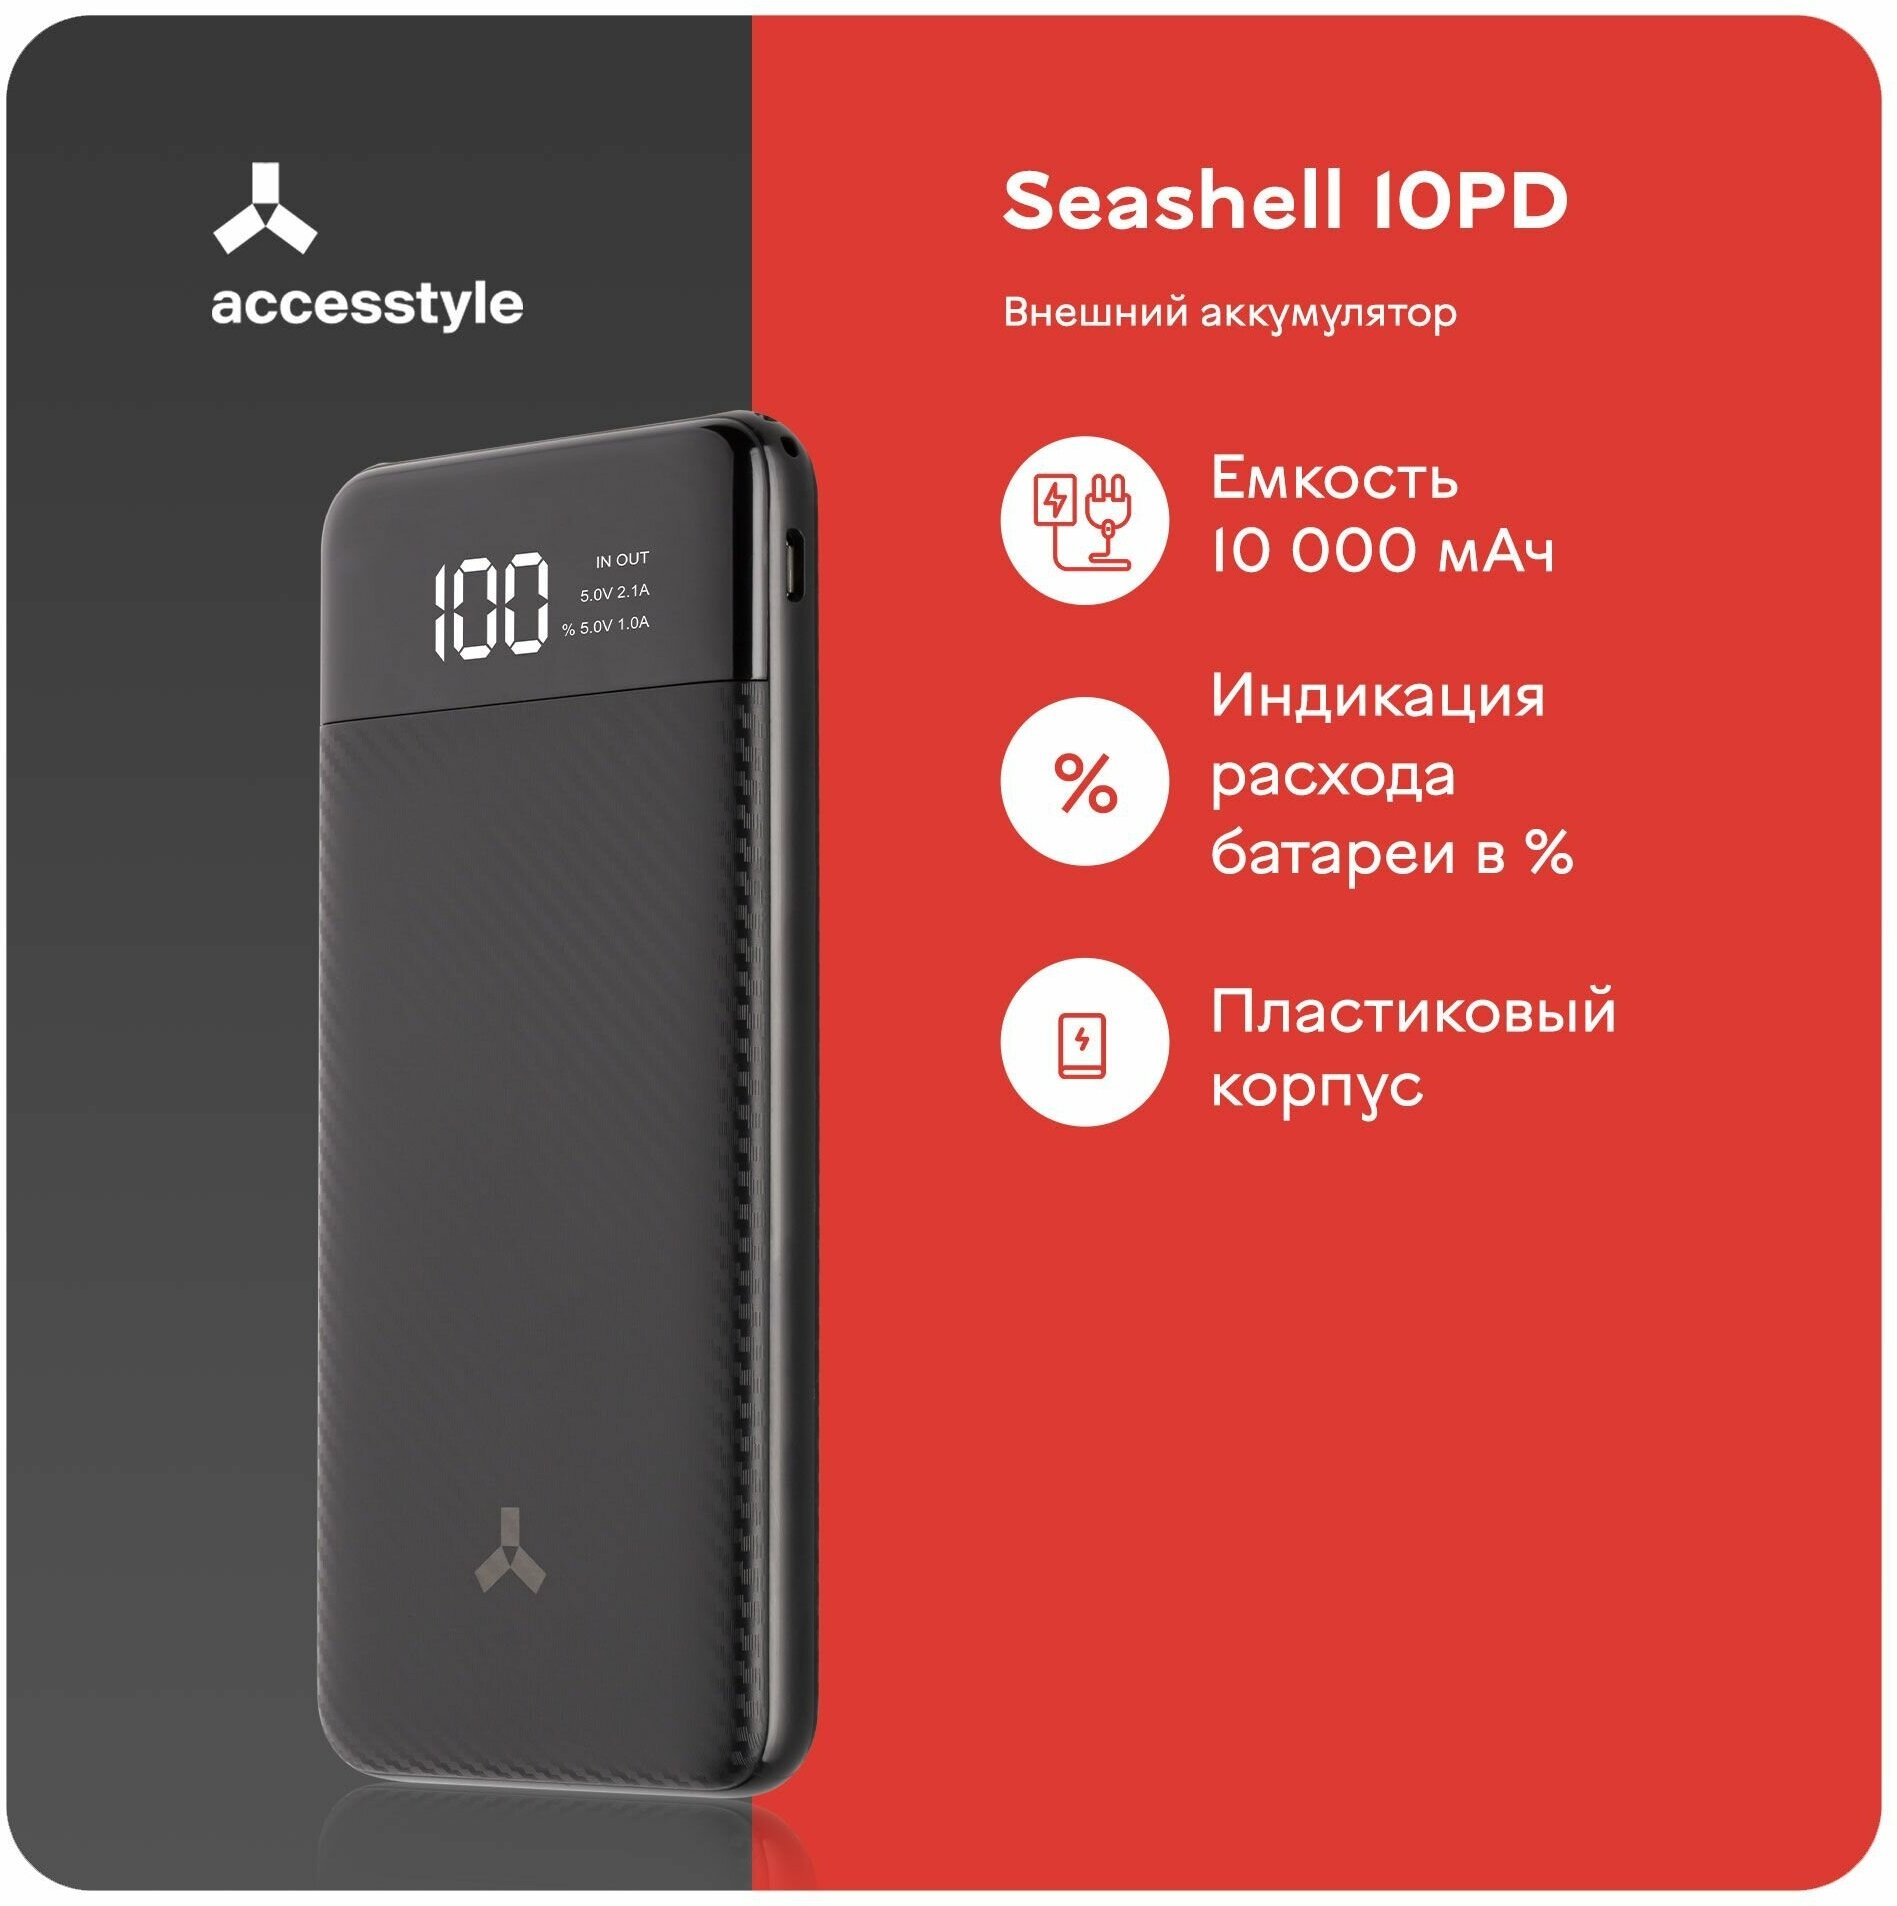 Портативный аккумулятор Accesstyle Seashell 10PD, черный, упаковка: коробка